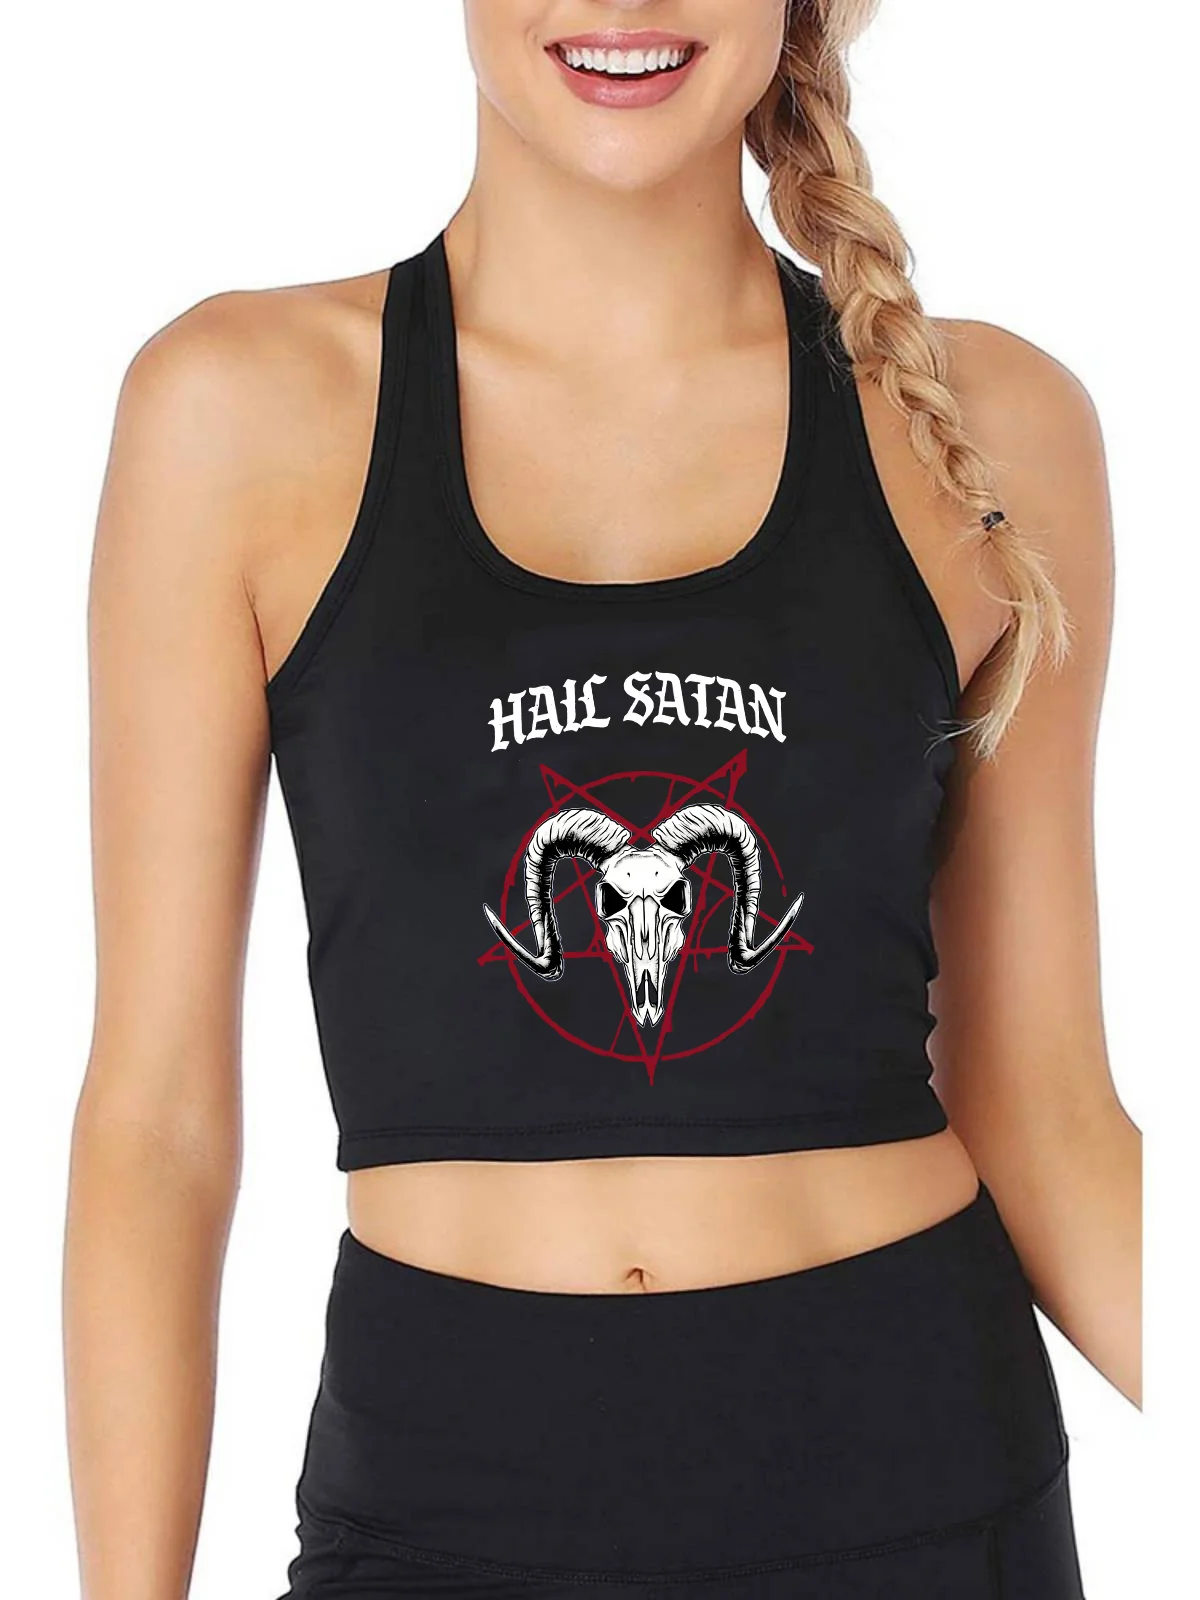 

Hail Satan Goat Skull And Pentagram Pattern Tank Tops Women Personality Breathable Slim Fit Crop Top Gym Shirt